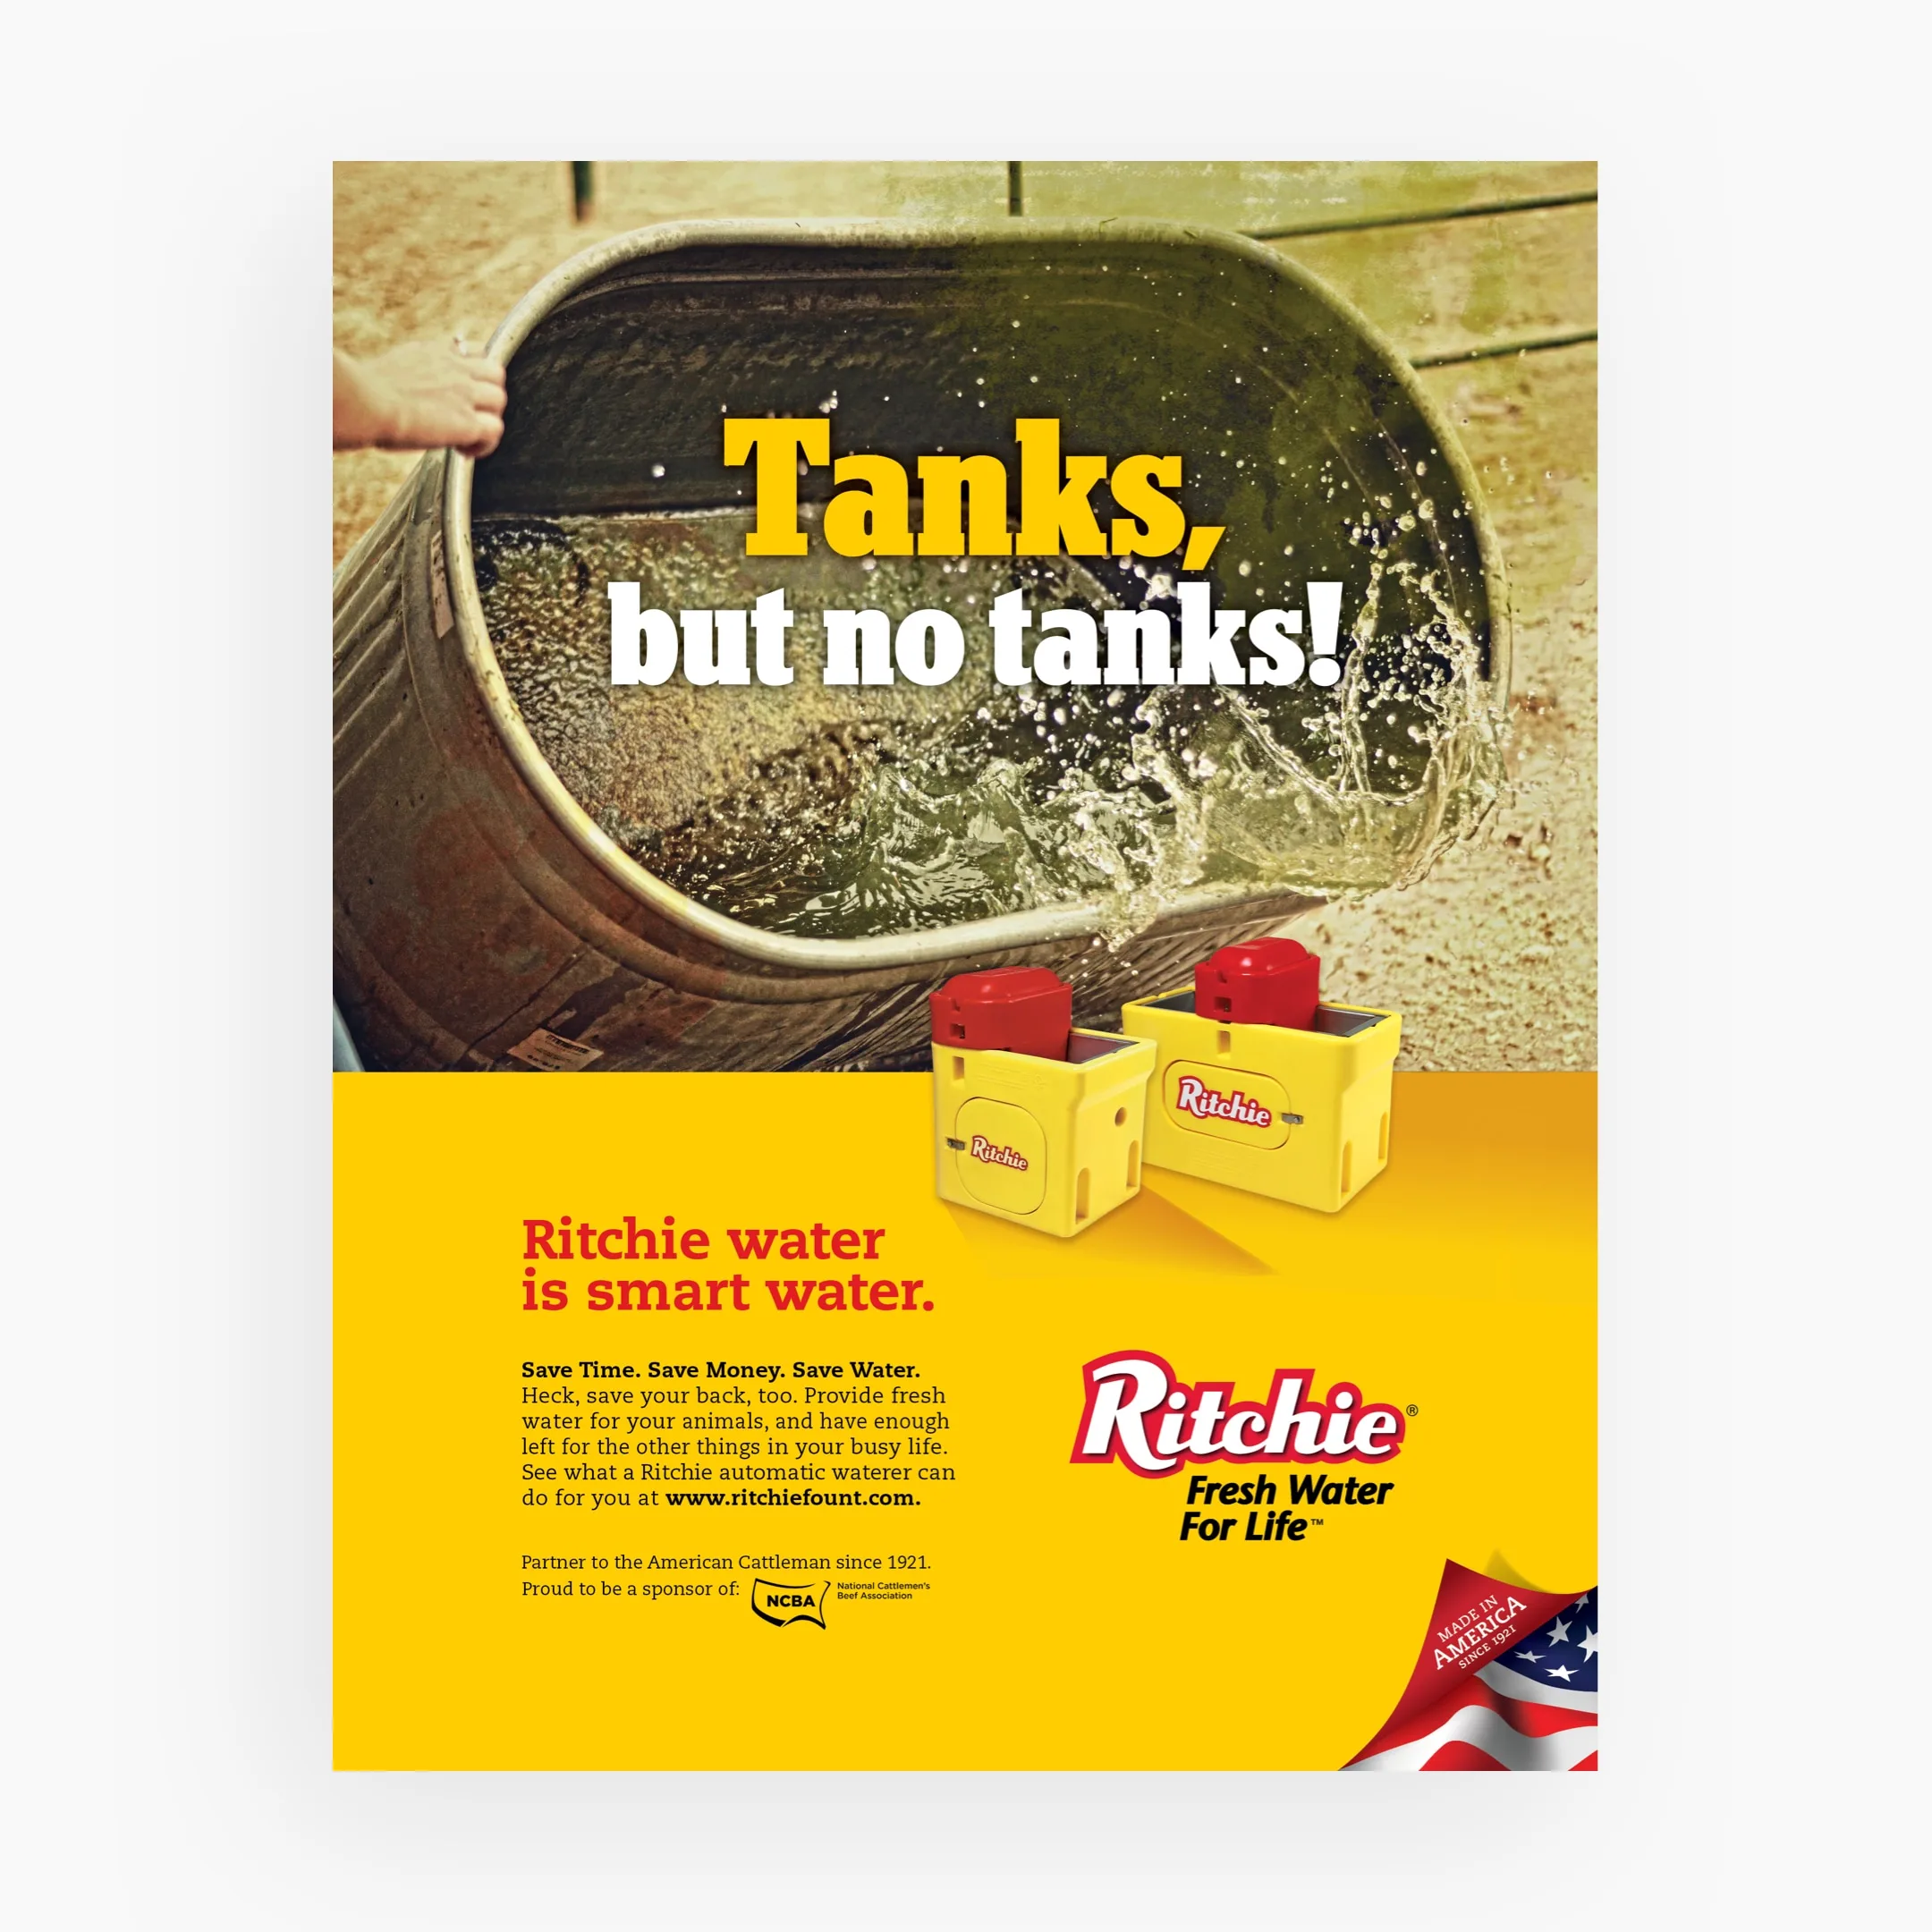 Tanks, but no tanks ritchie print ad